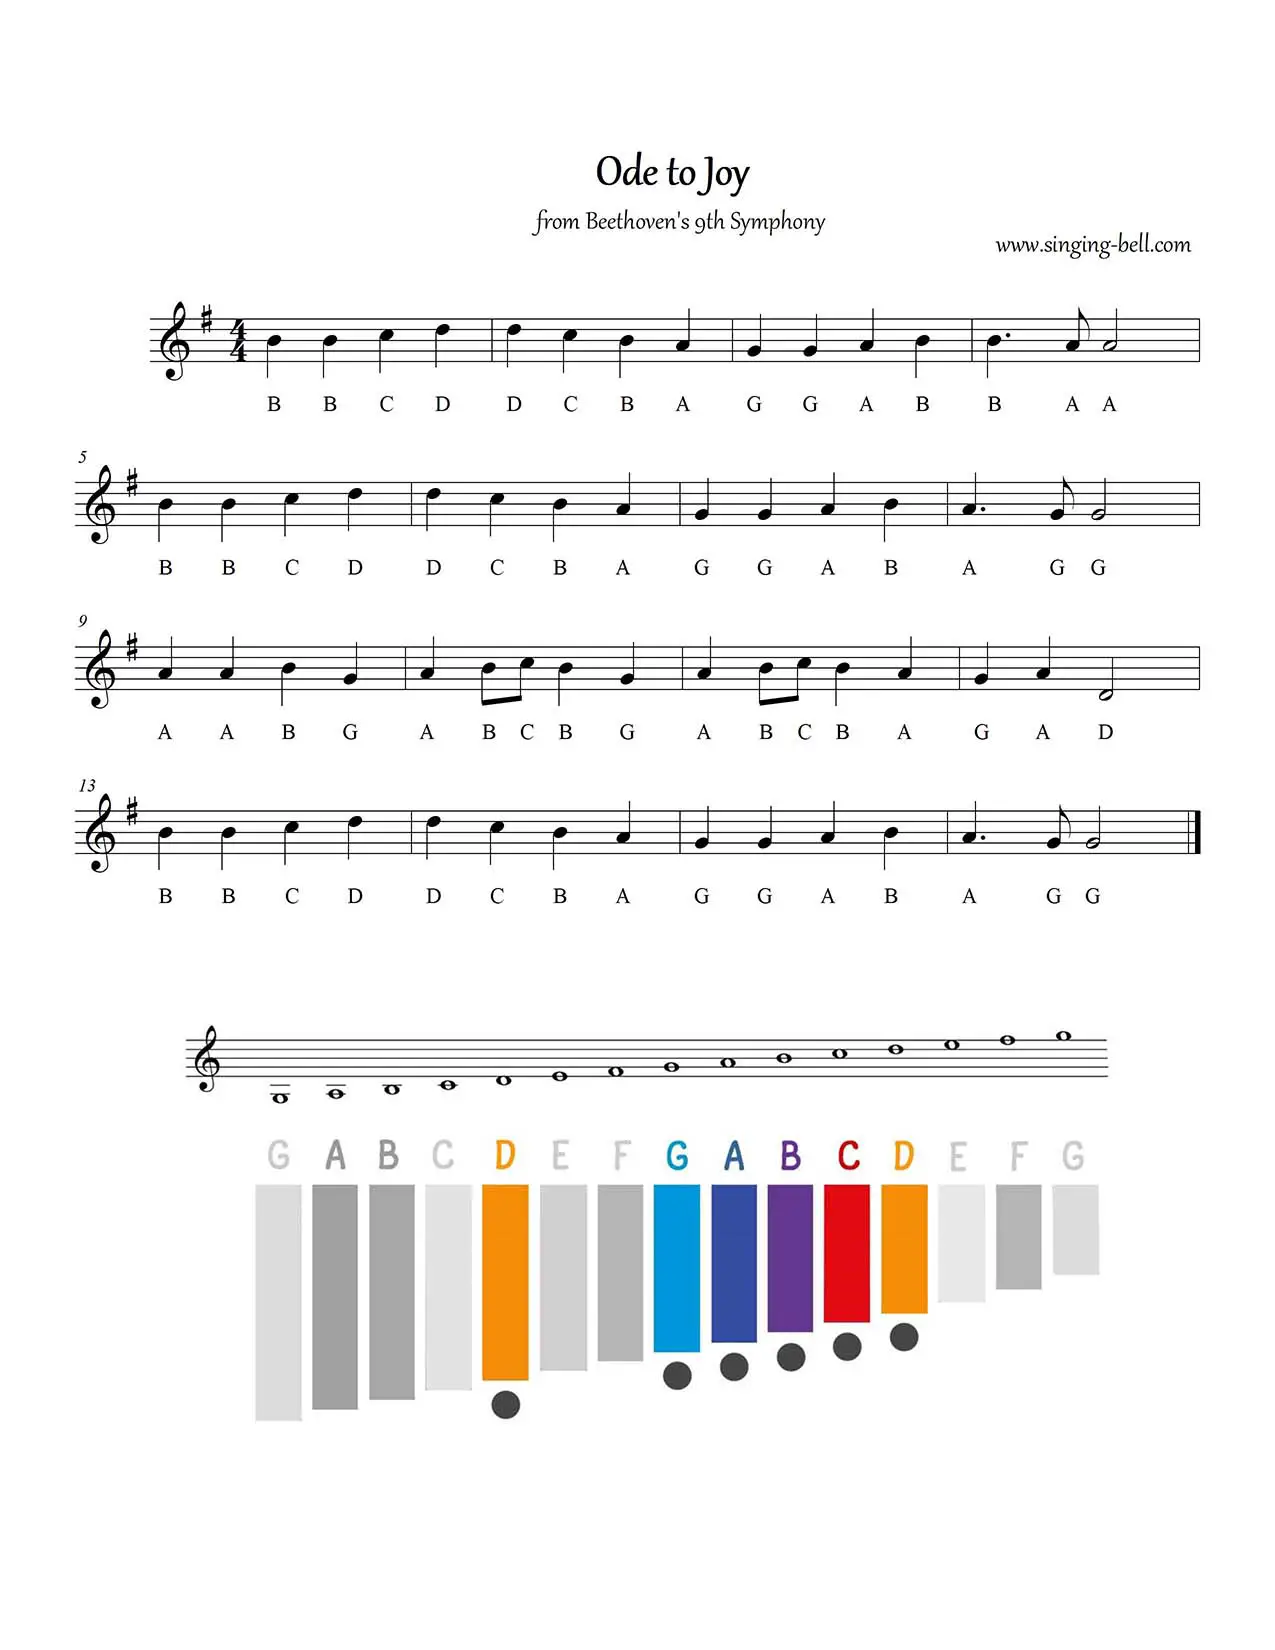 Ode To Joy free xylophone glockenspiel sheet music notes chart pdf